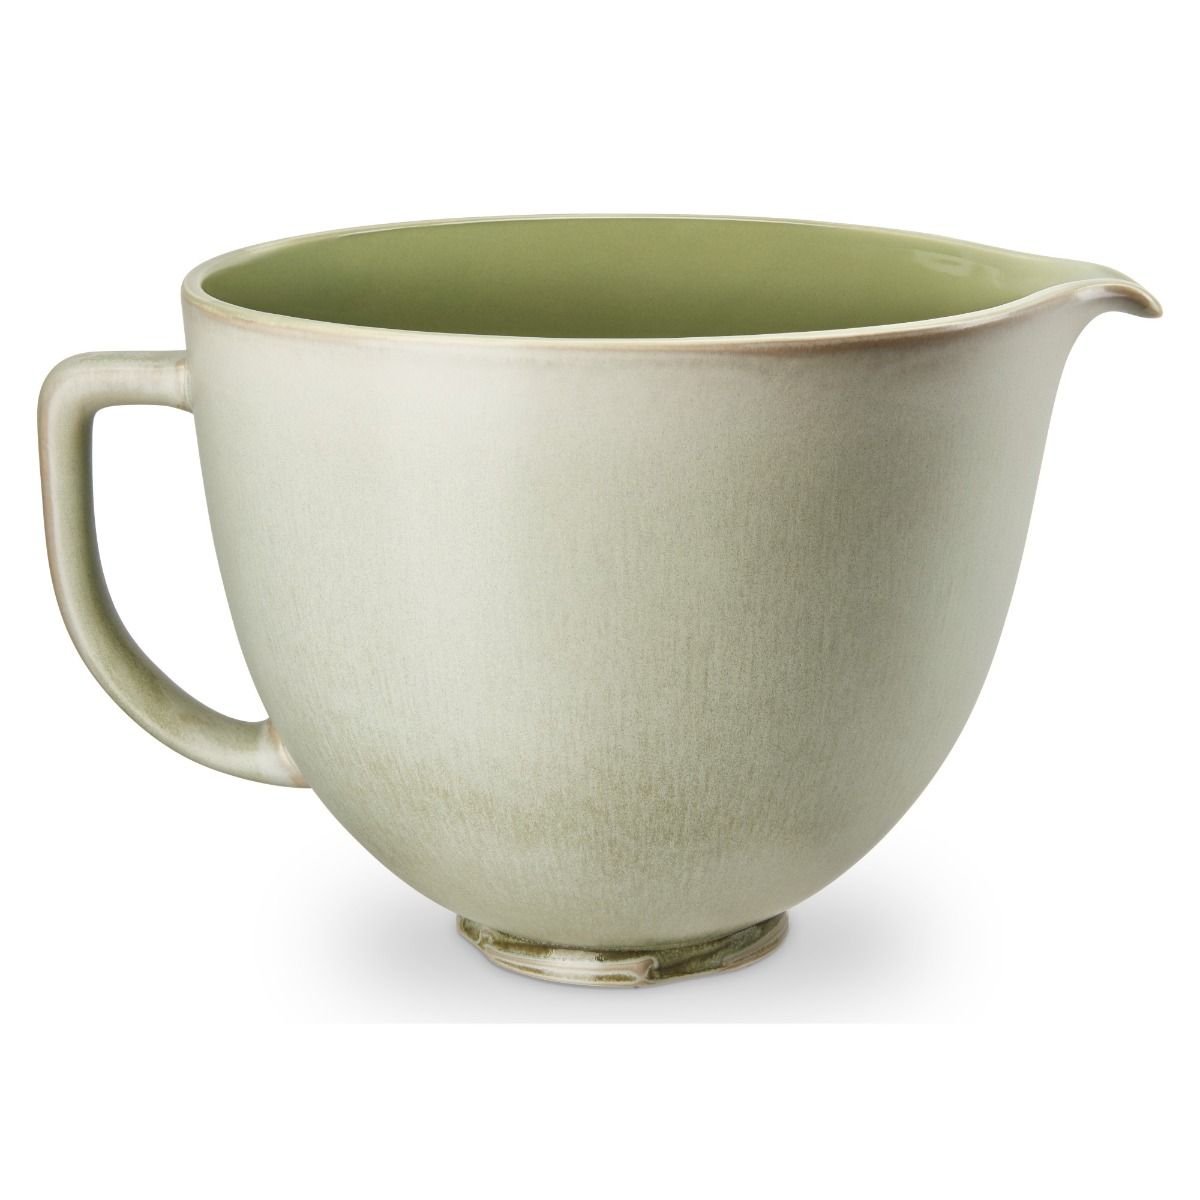 GVODE Mixing Ceramic Bowls for Kitchenaid Mixer Bowl, 4.5-5Q Tilt-Head for  Kitchenaid Bowl- Painted Green Flowers